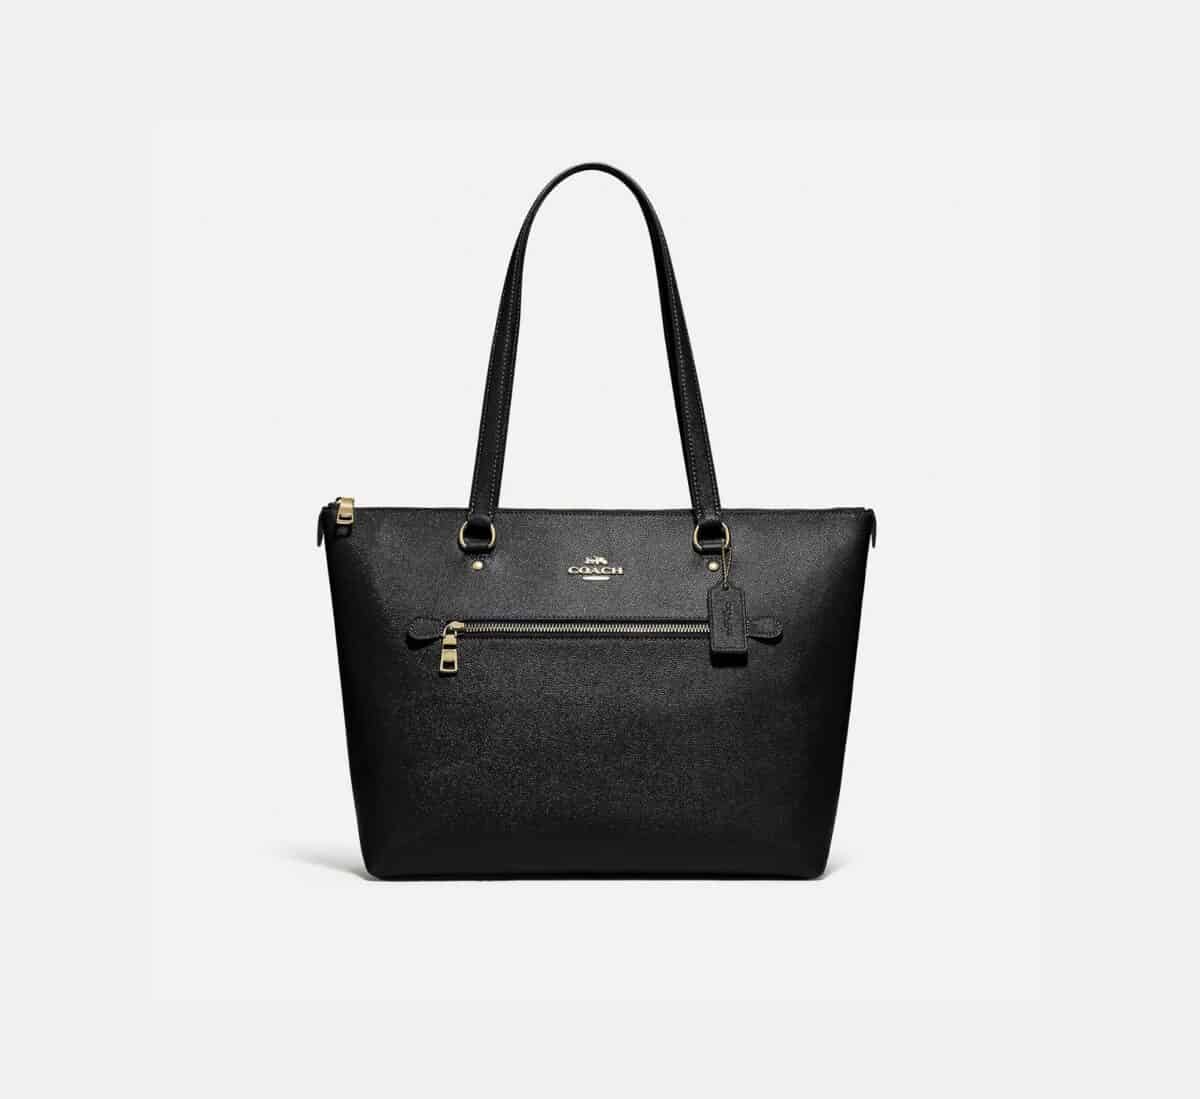 Buy ANGLOPANGLO Women's Handbag at Amazon.in